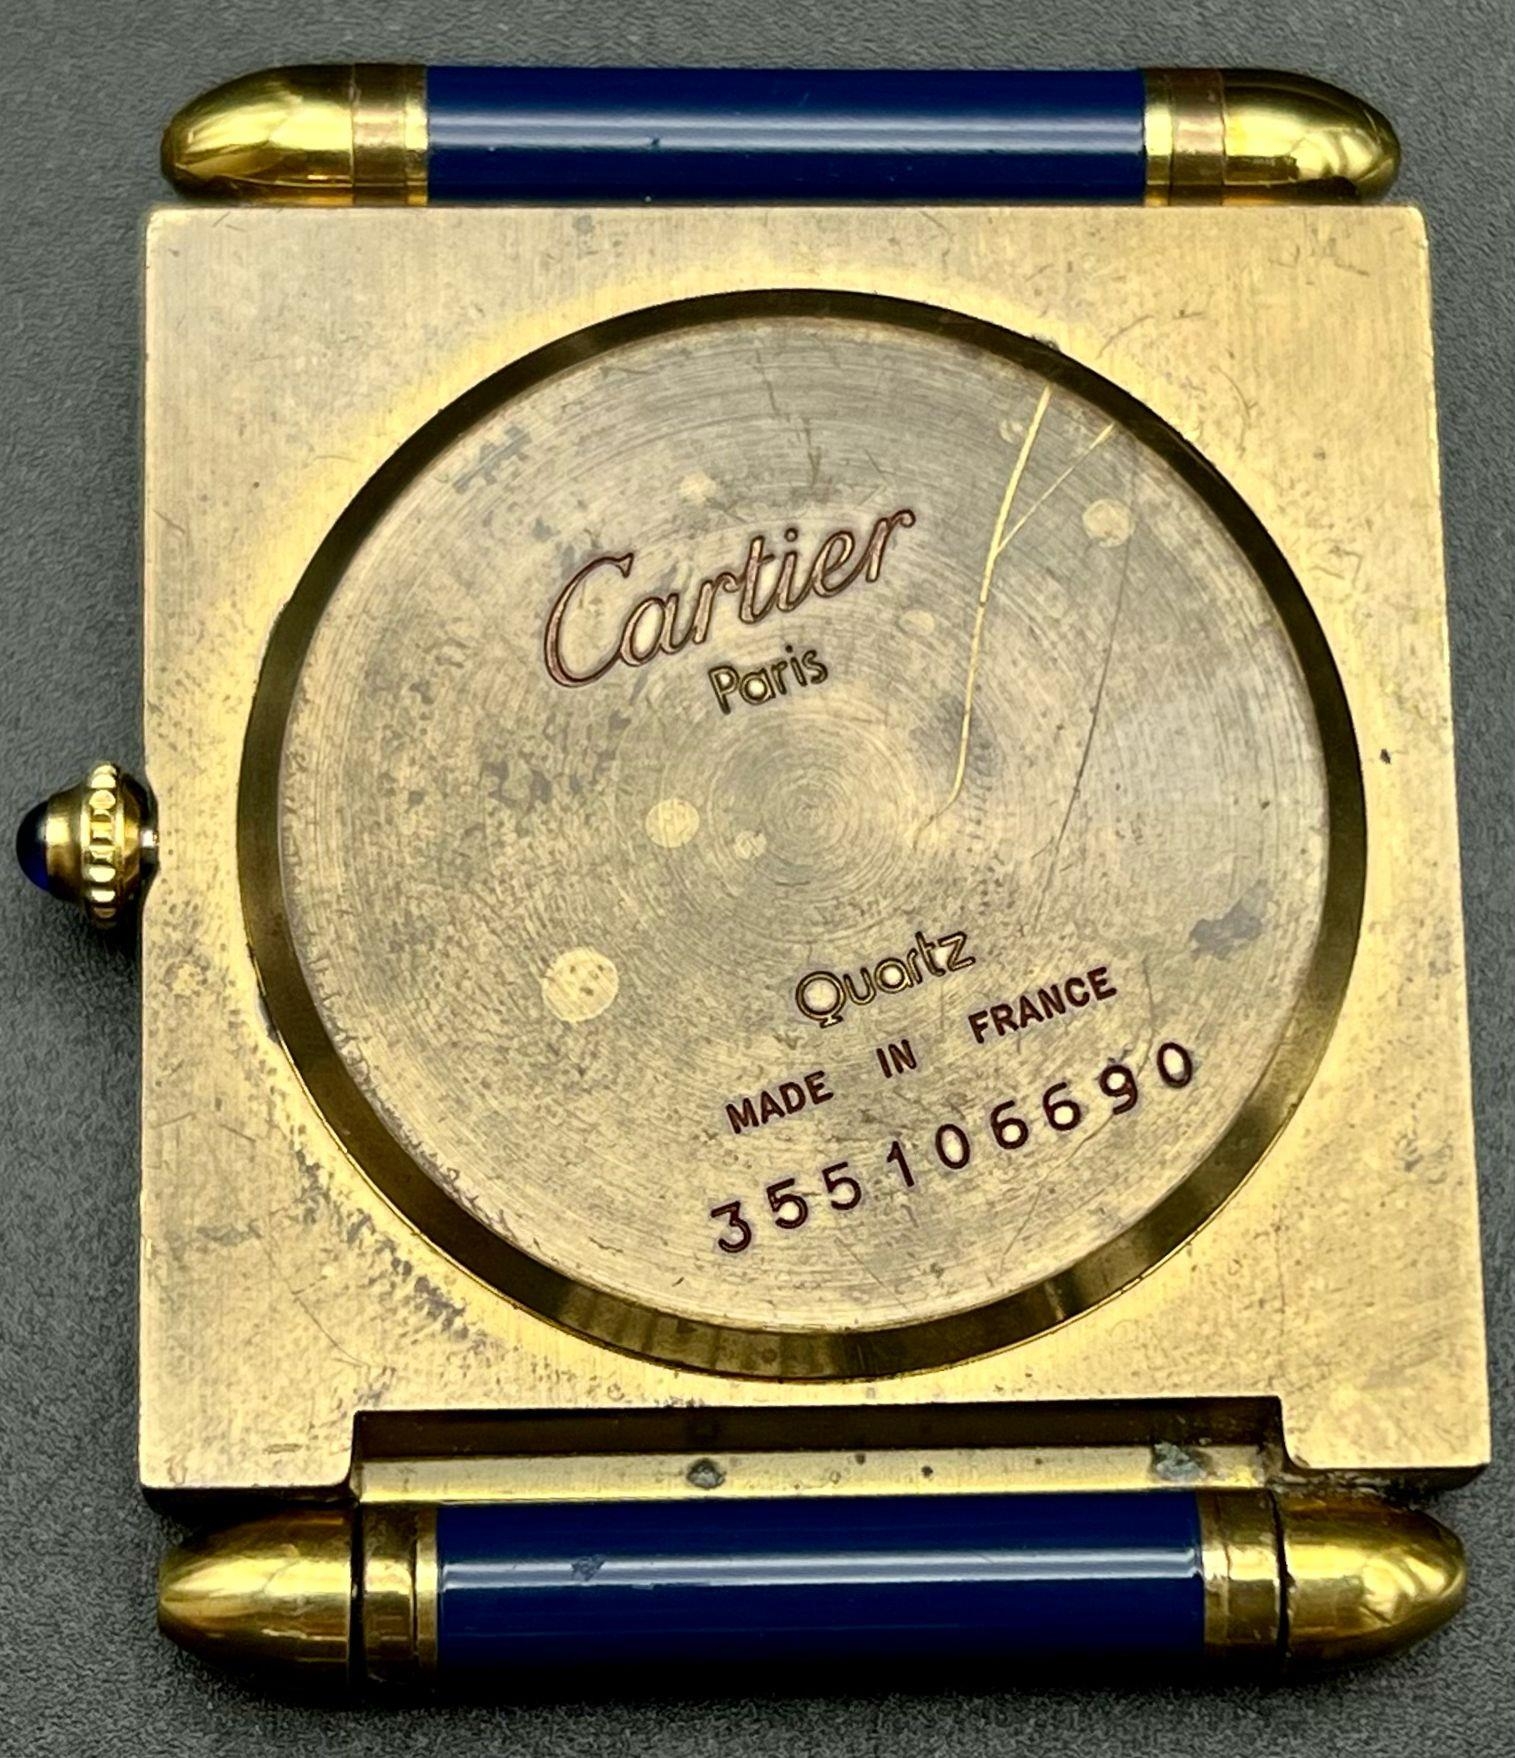 Cartier travelling alarm clock in working condition - Bild 5 aus 5